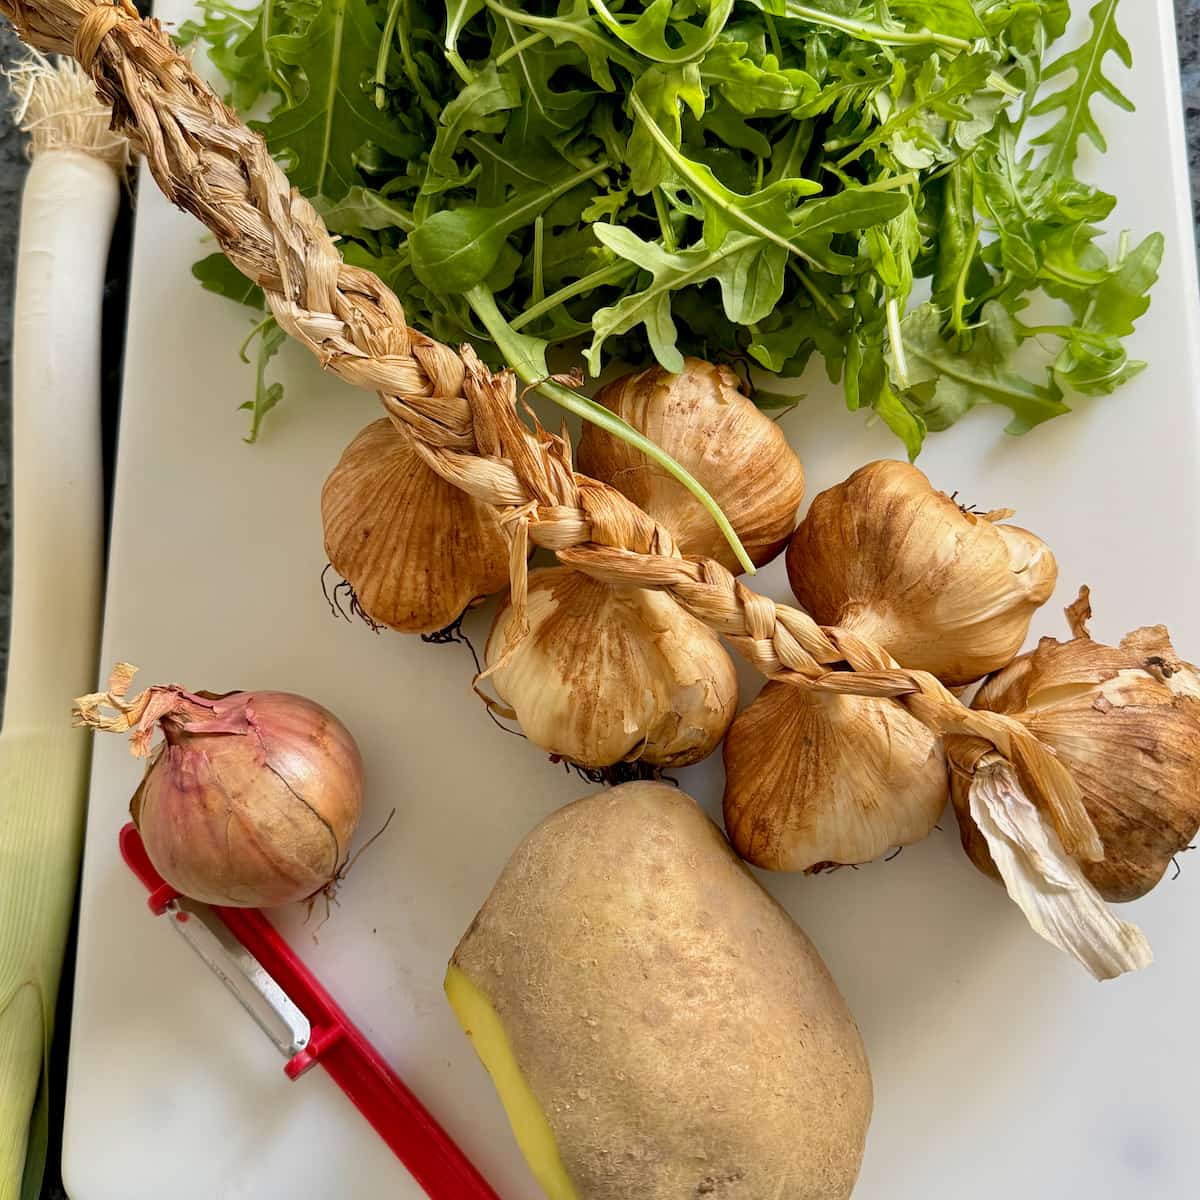 smoked garlic with potato and rocket/arugula leaves